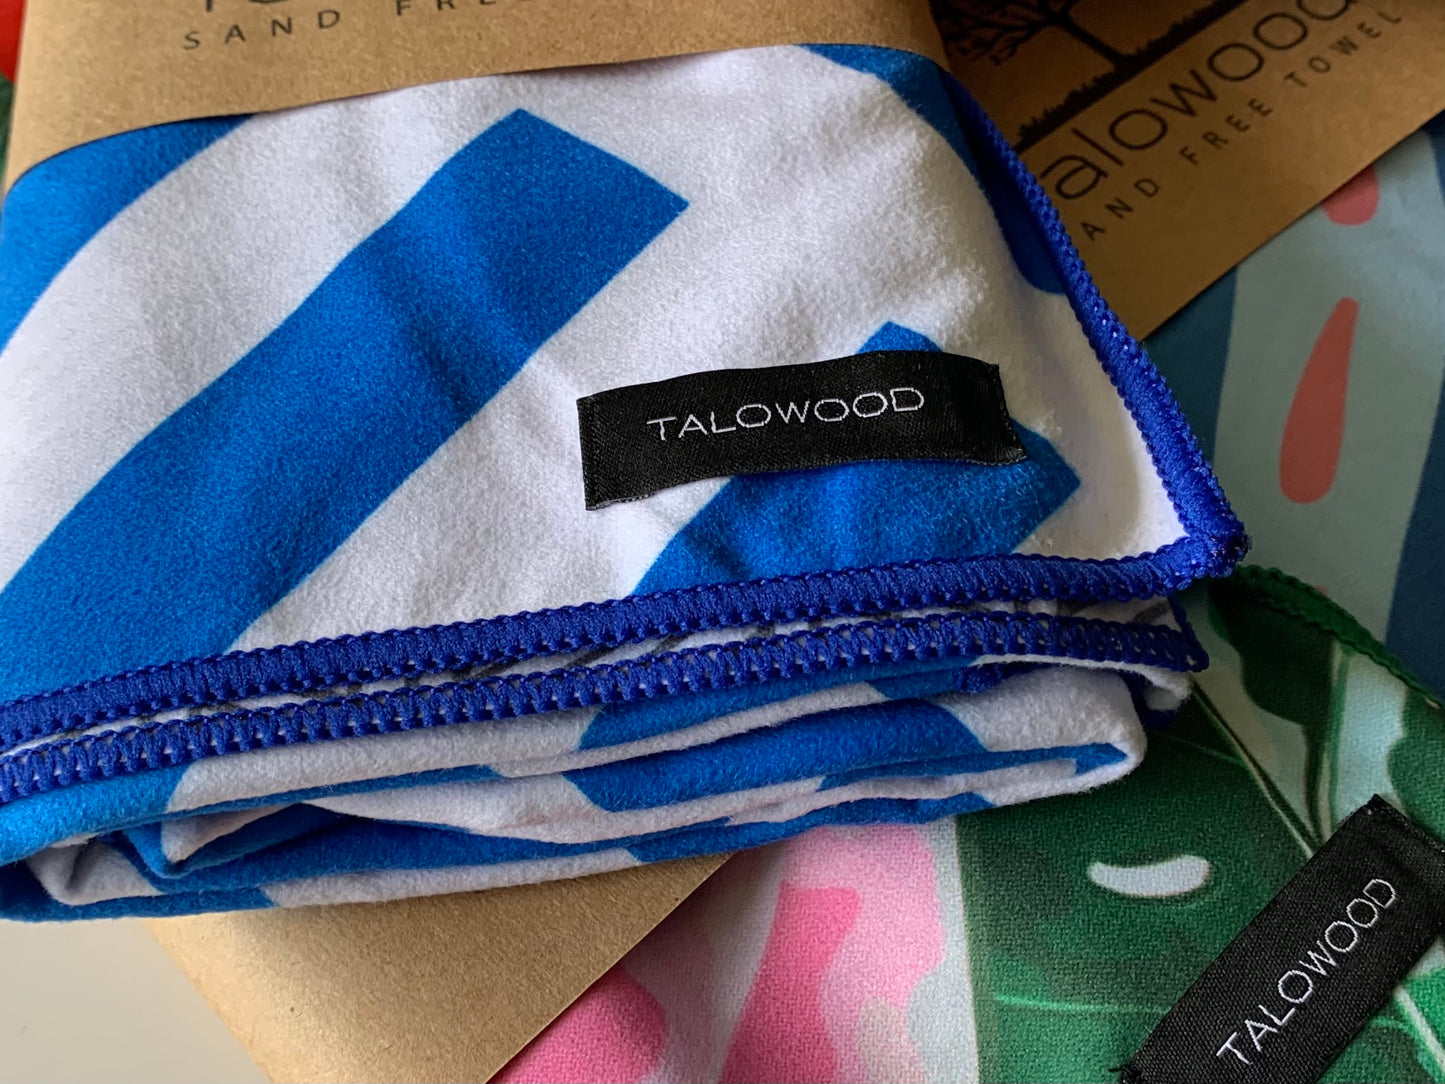 TALOWOOD SAND FREE TOWEL